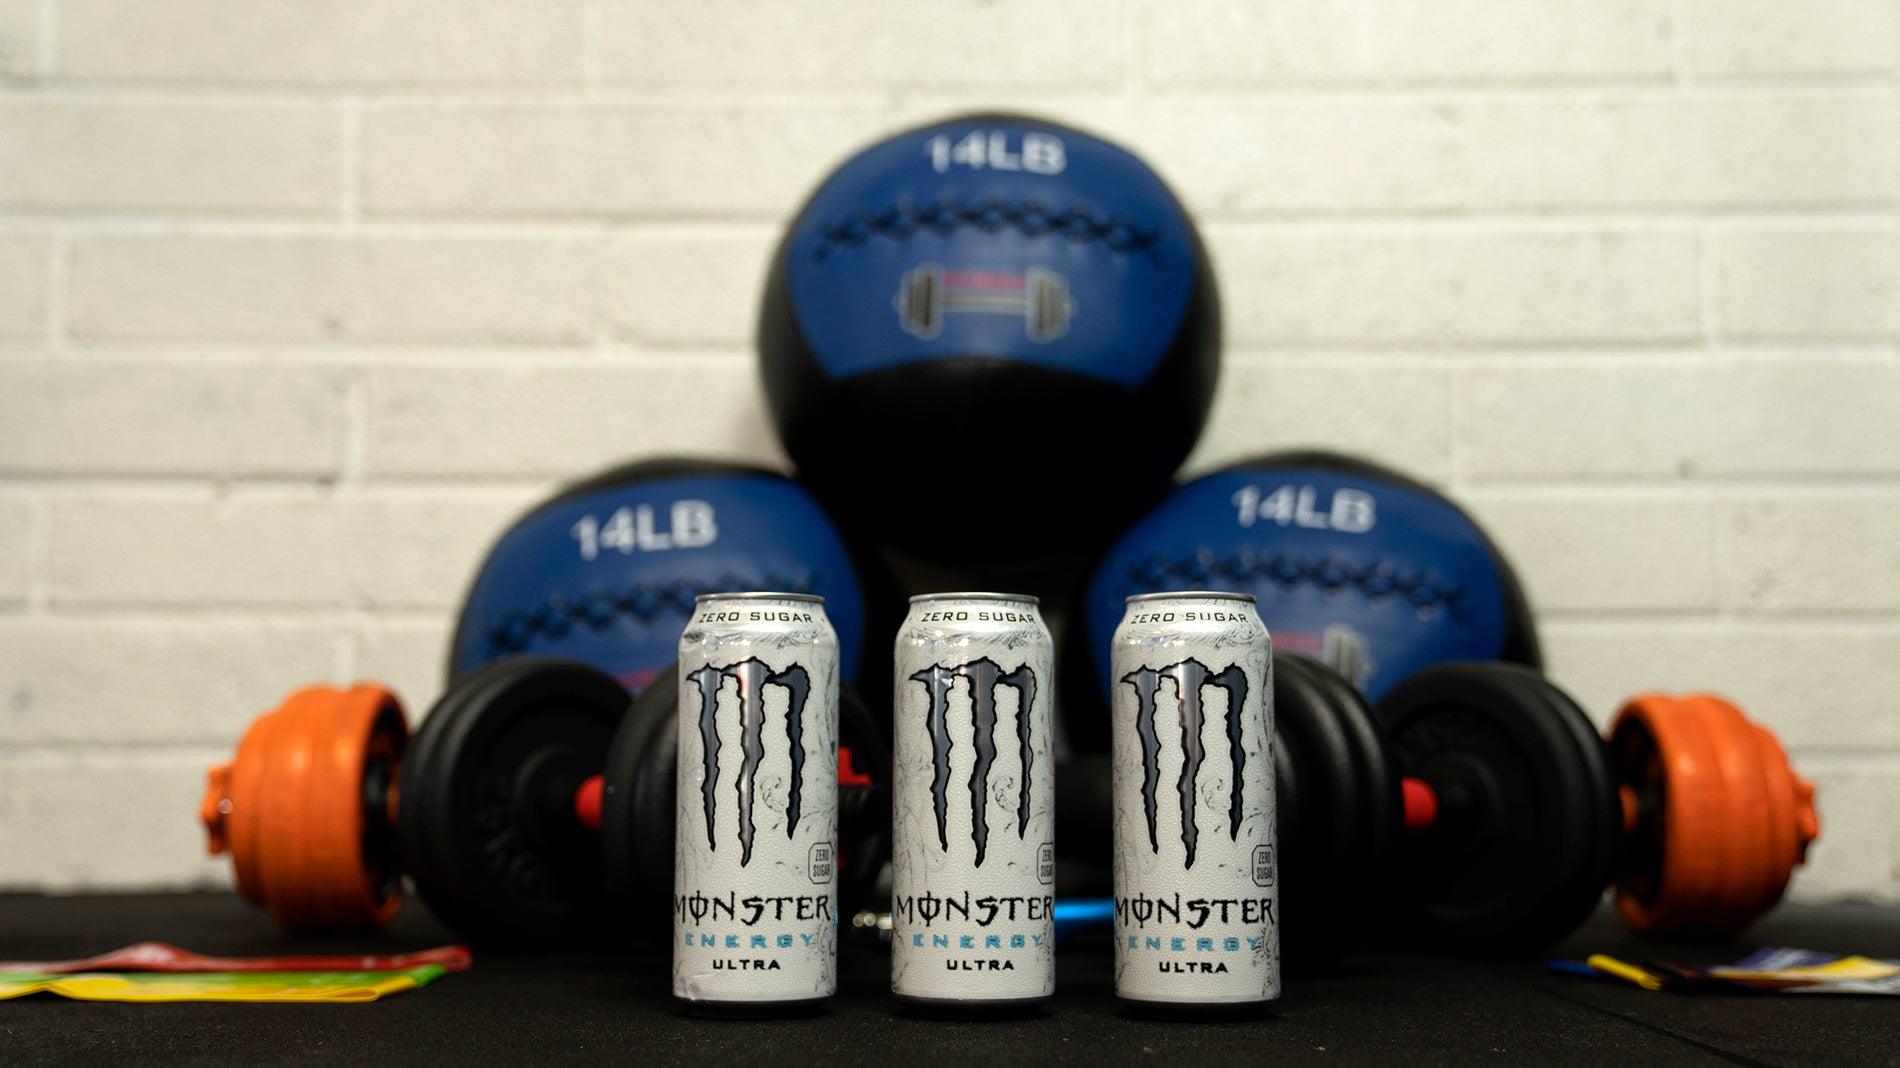 Monster Ultra Energy Drink - 500ml x 12 (White) Fitness For Home Store 